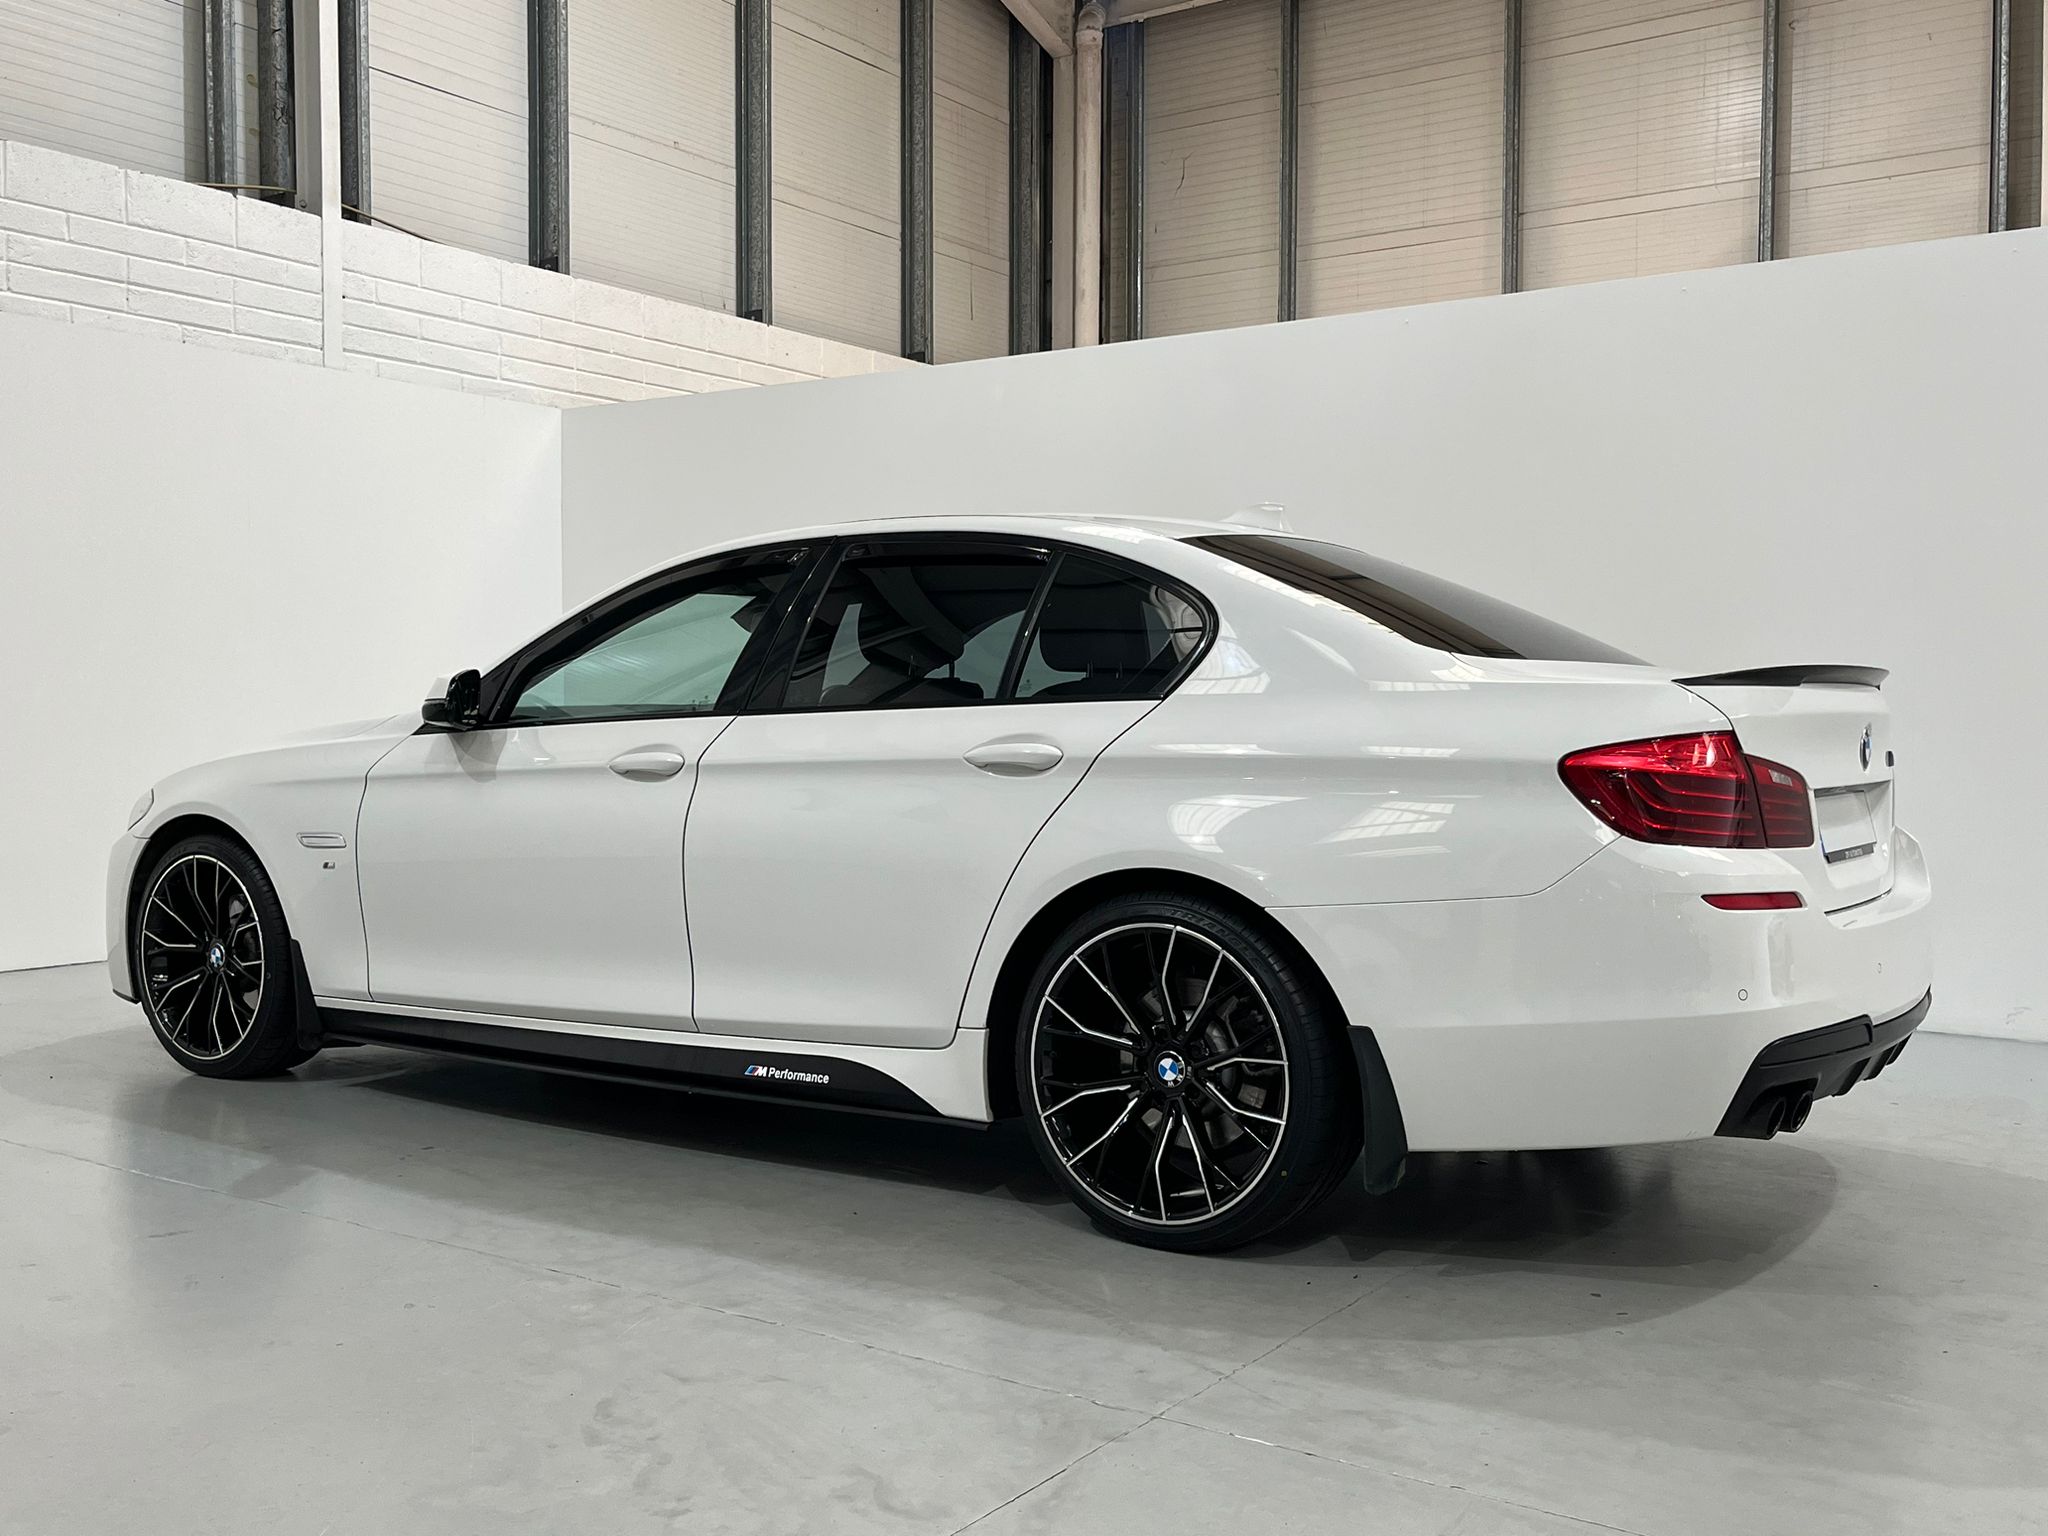 2016 BMW 520D F10 M Sport M Performance – My Blog